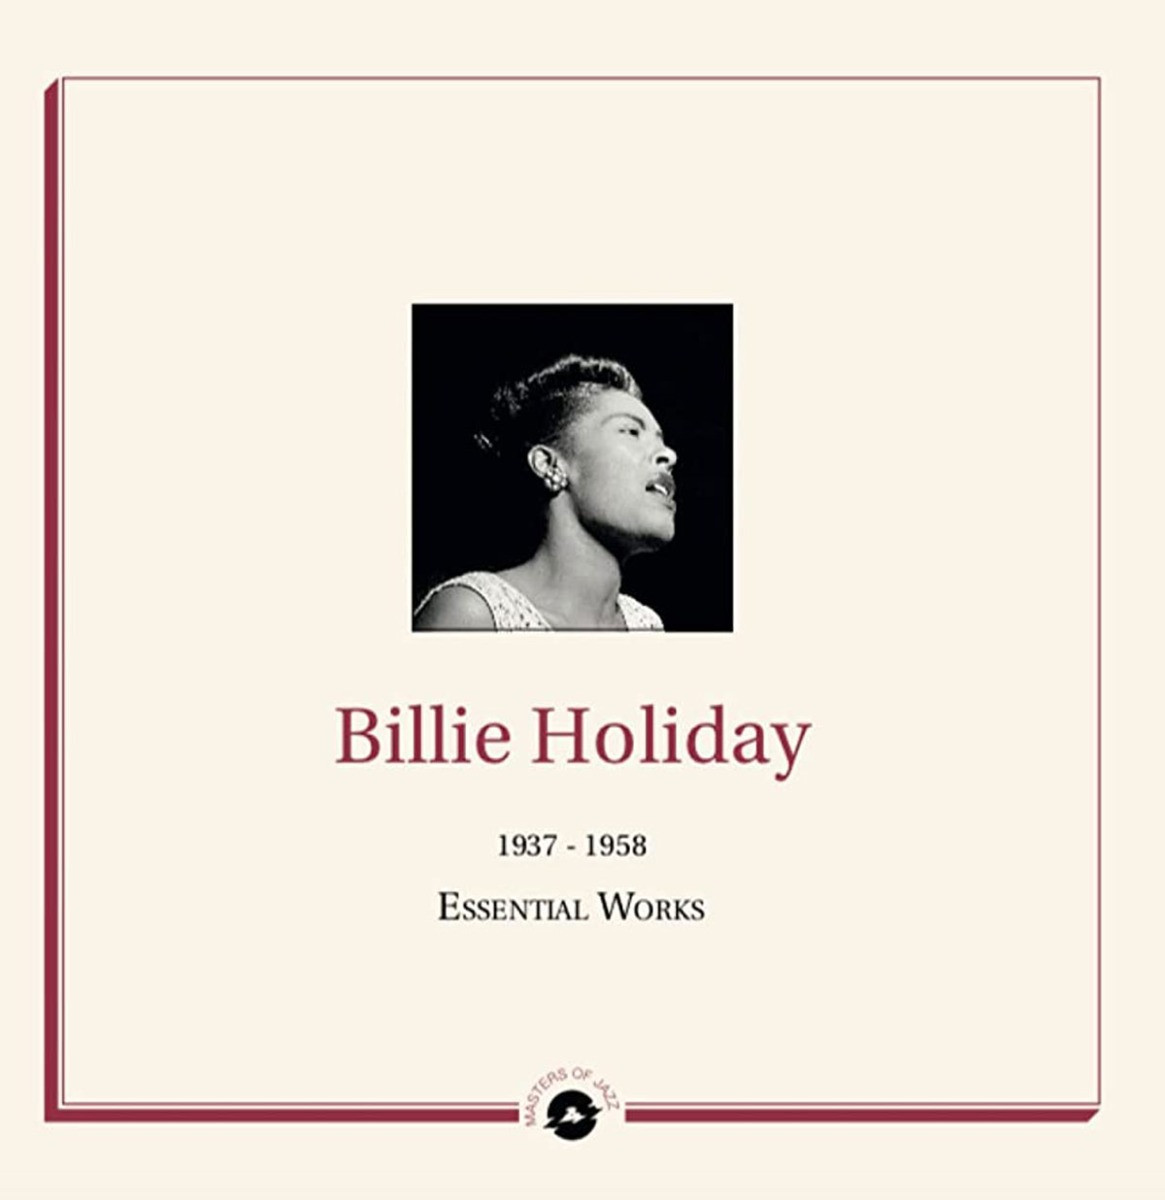 Billie Holiday - 1937-1958 Essential Works 2LP